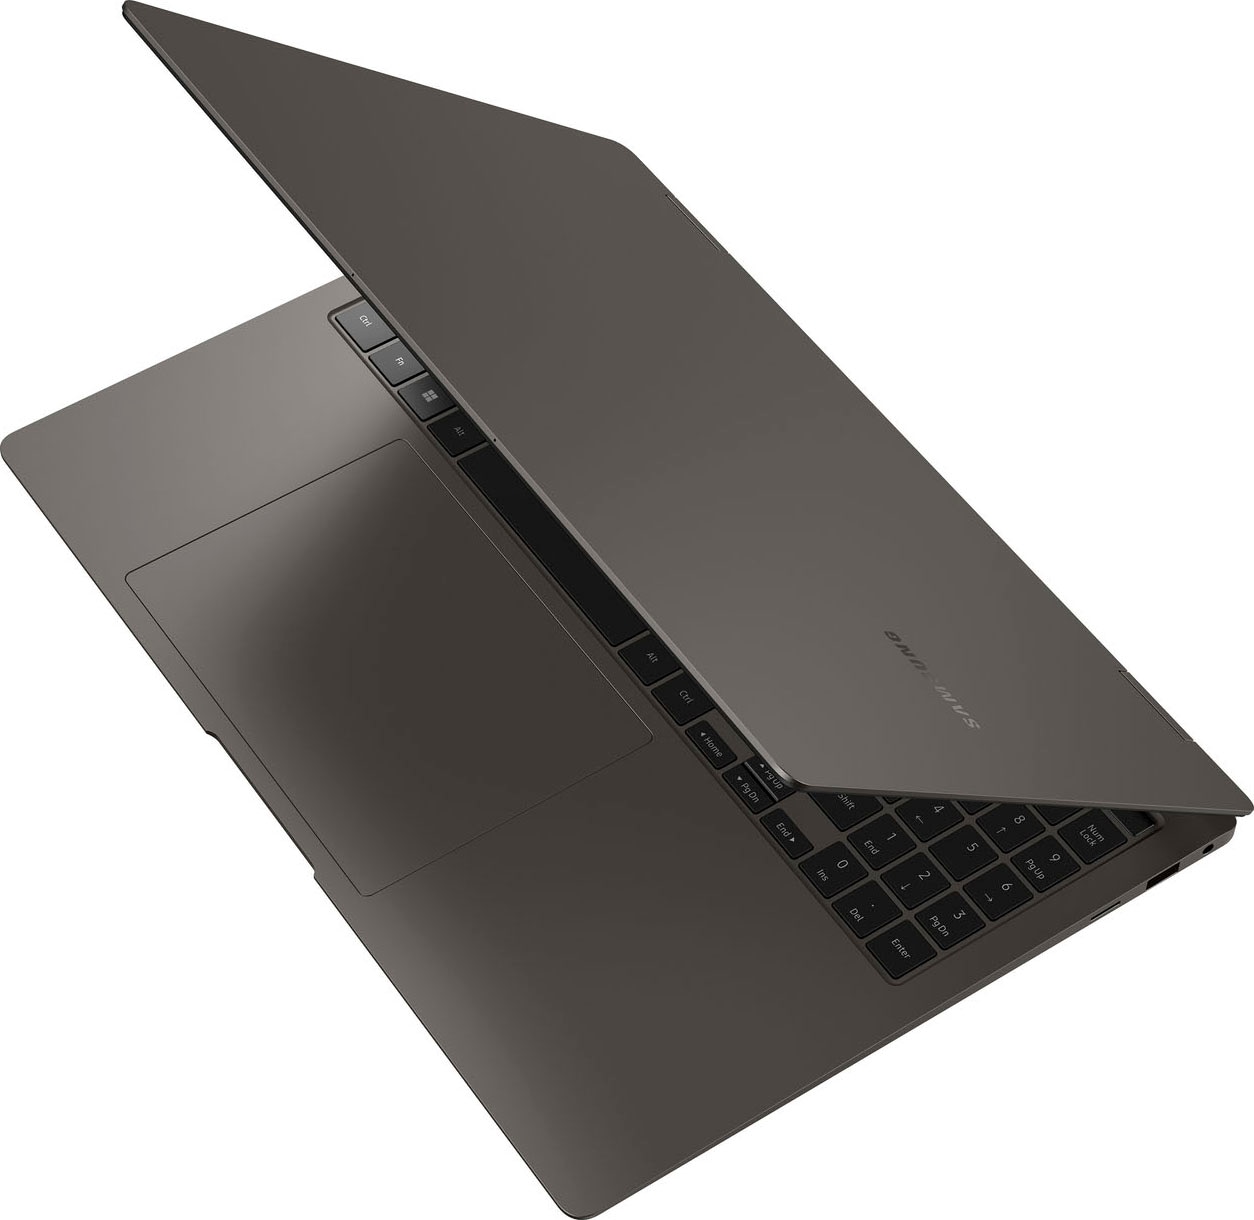 Samsung Notebook »Galaxy Book3 Pro 360«, 40,62 cm, / 16 Zoll, Intel, Core i7, Iris Xe Graphics, 512 GB SSD